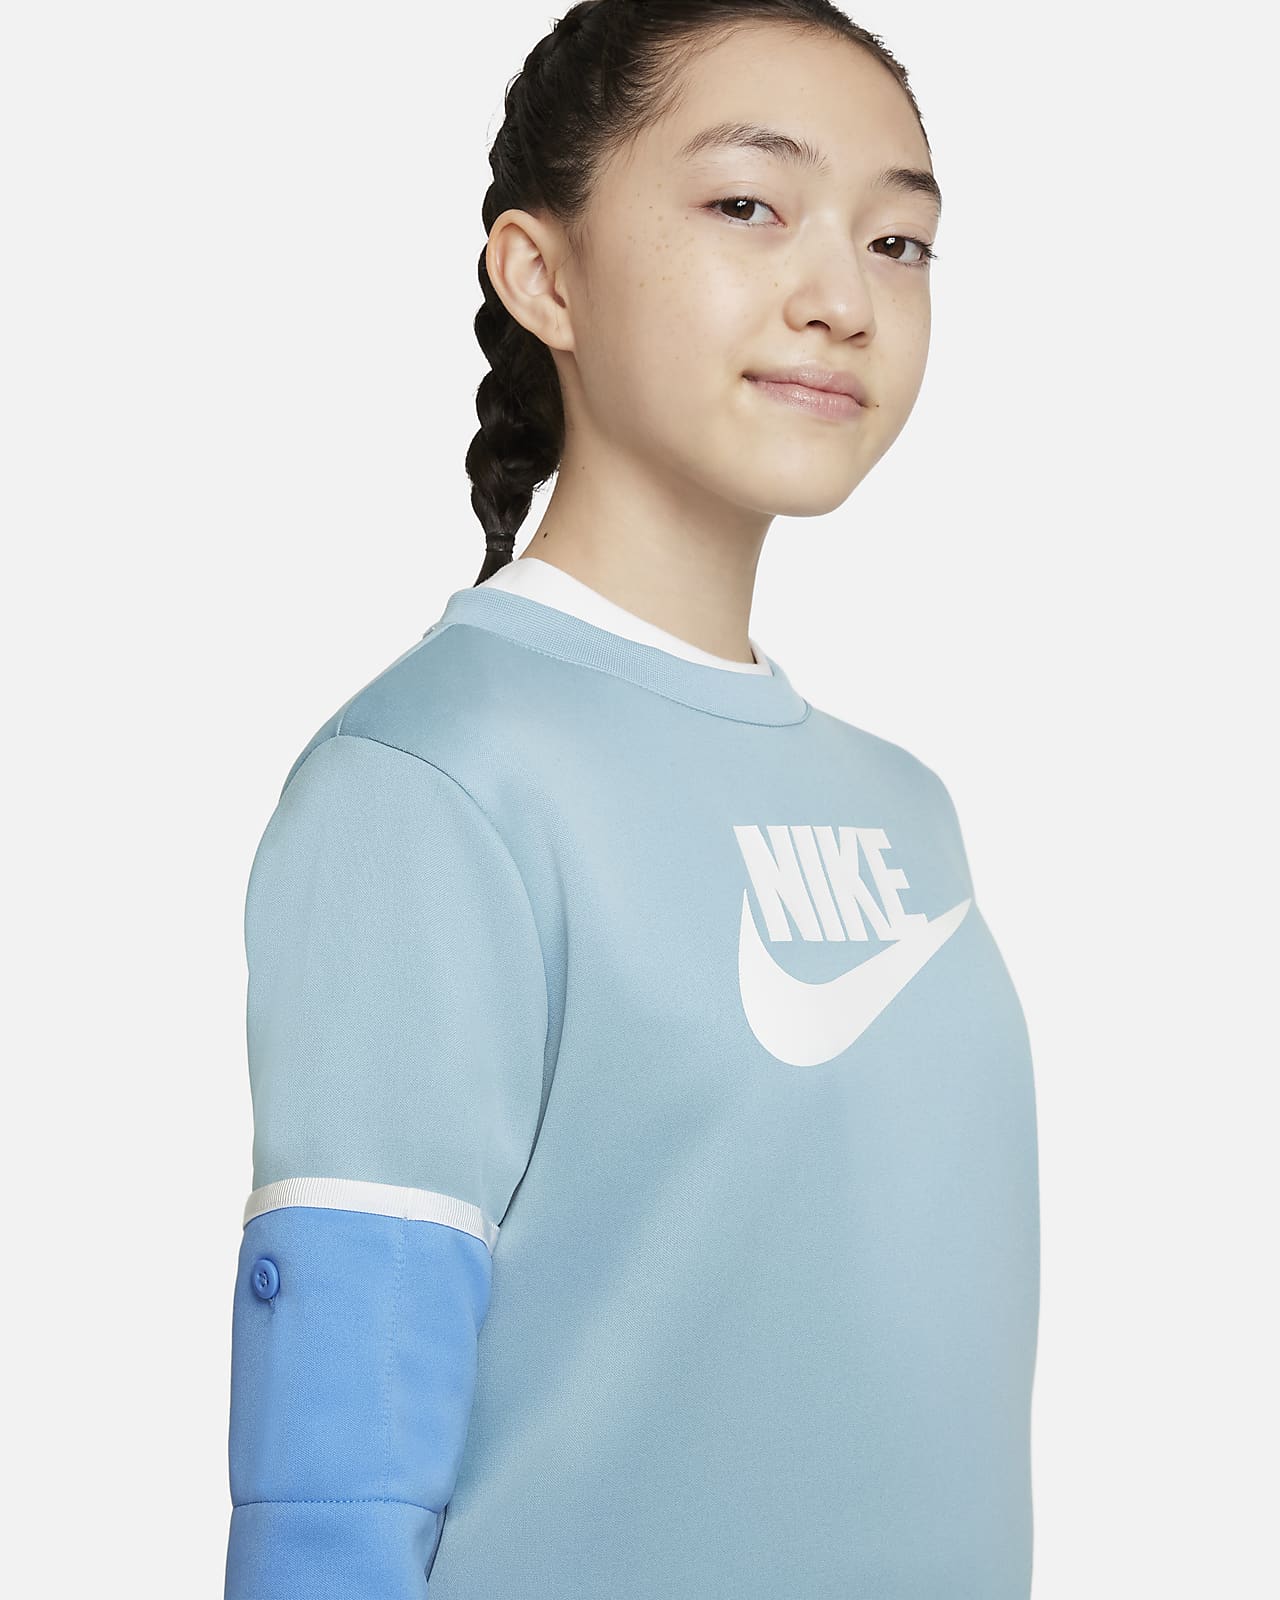 Nike Sportswear Older Kids' Polyester Tracksuit